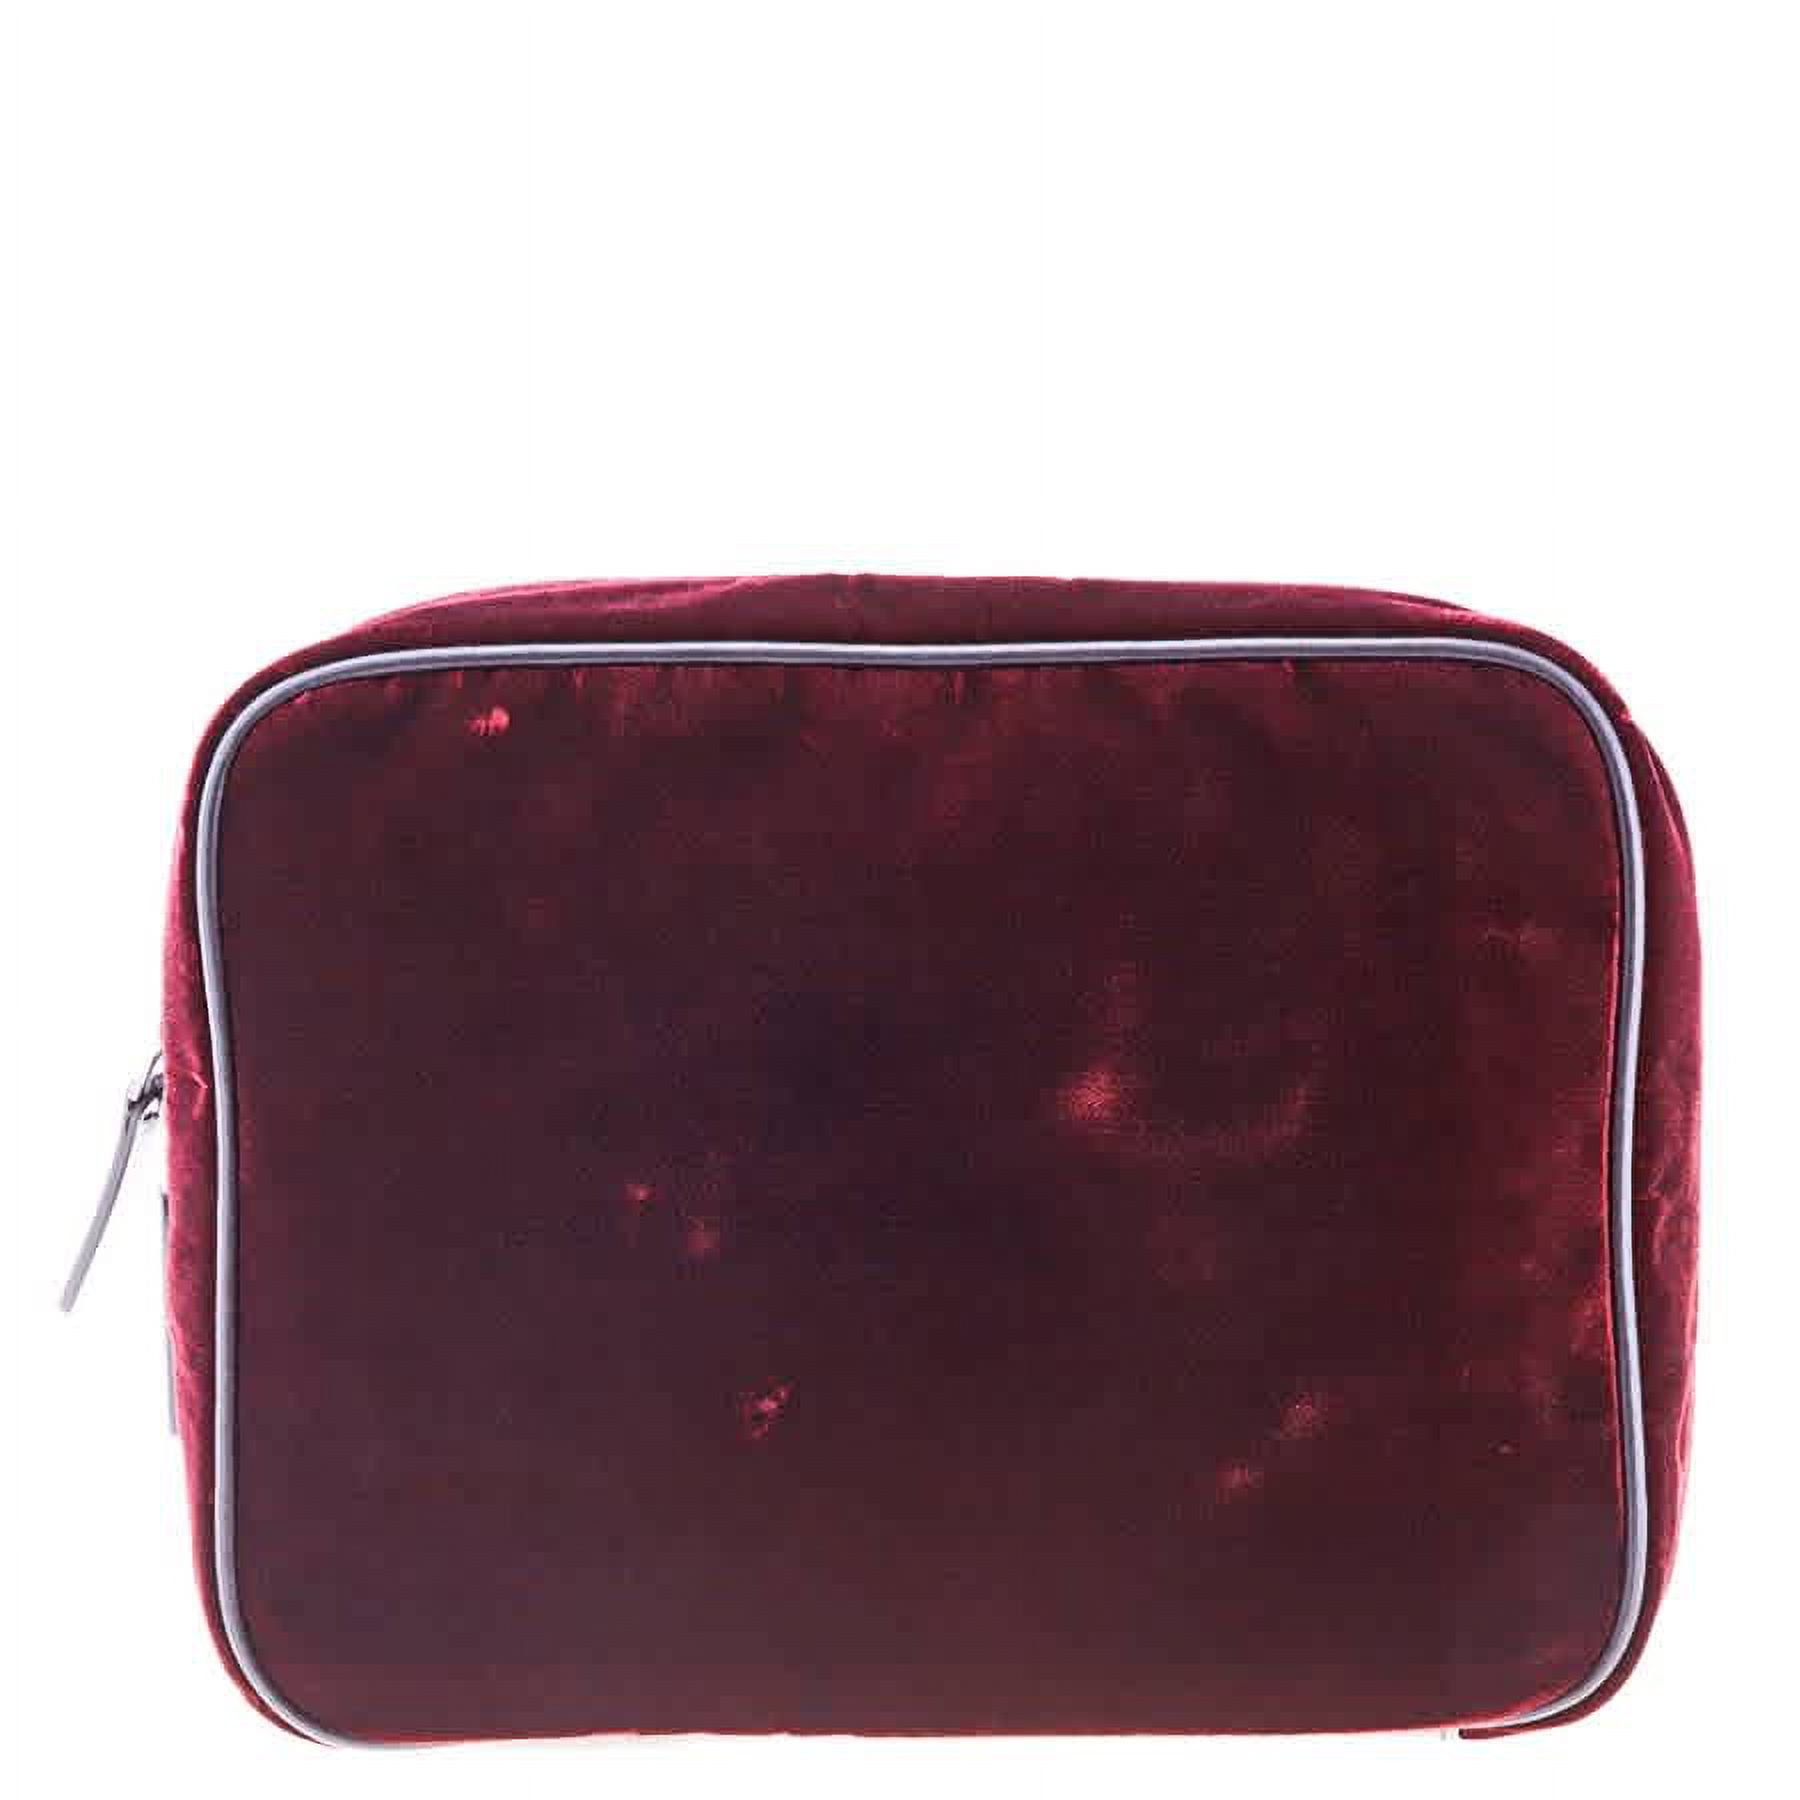 Georgio Armani Clutch Handbags | Mercari